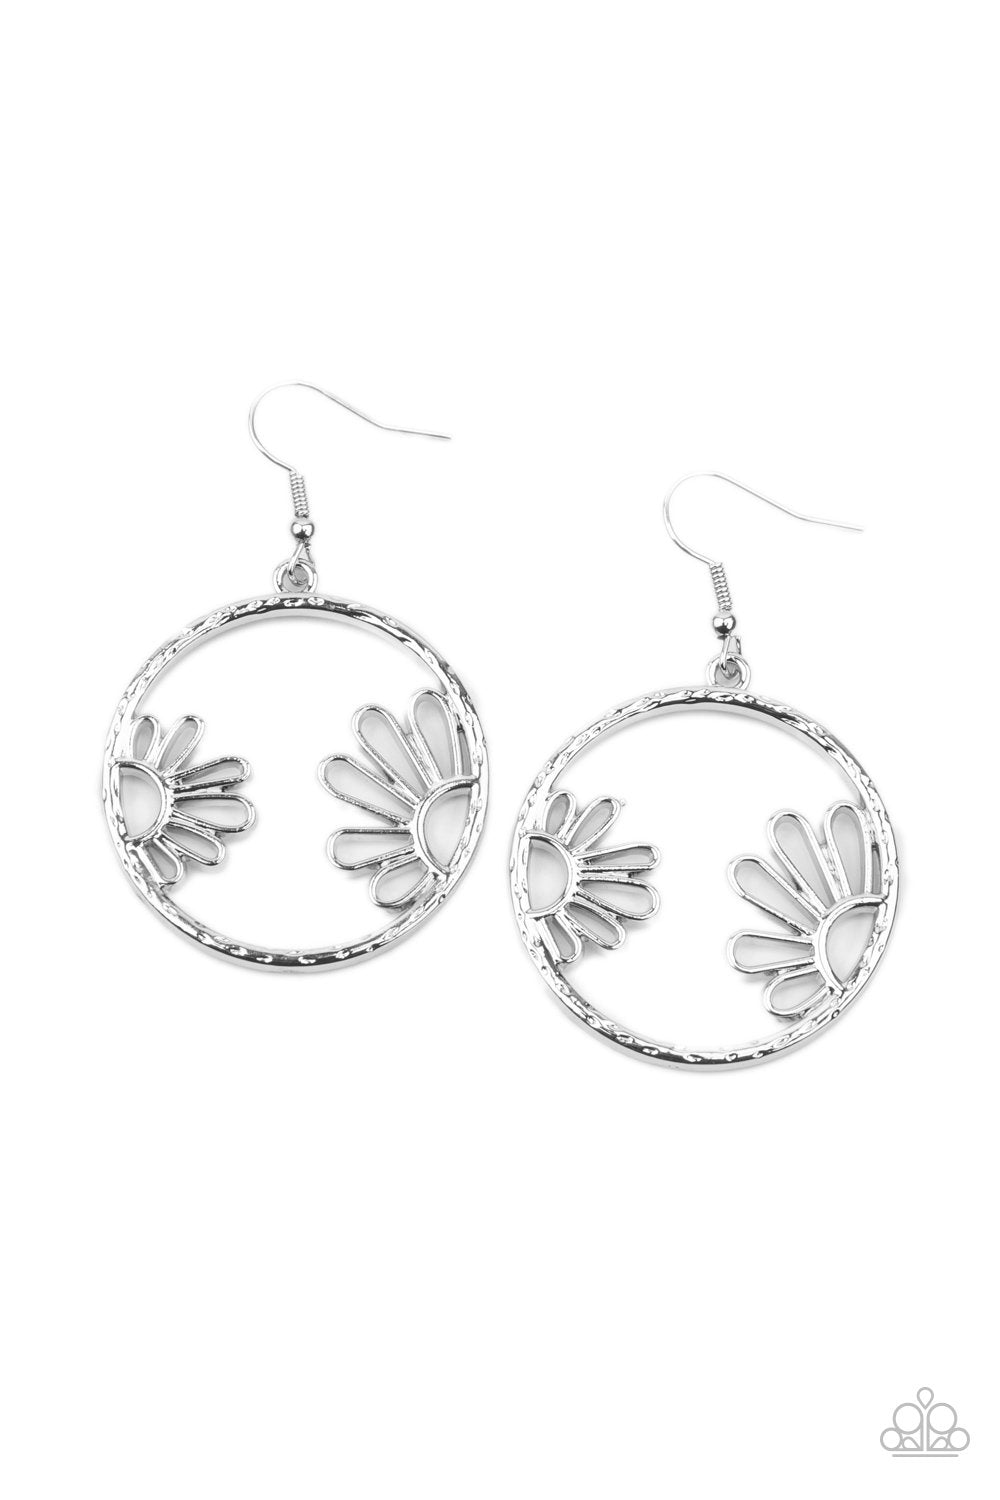 Demurely Daisy - Paparazzi - Silver Floral Circular Earrings